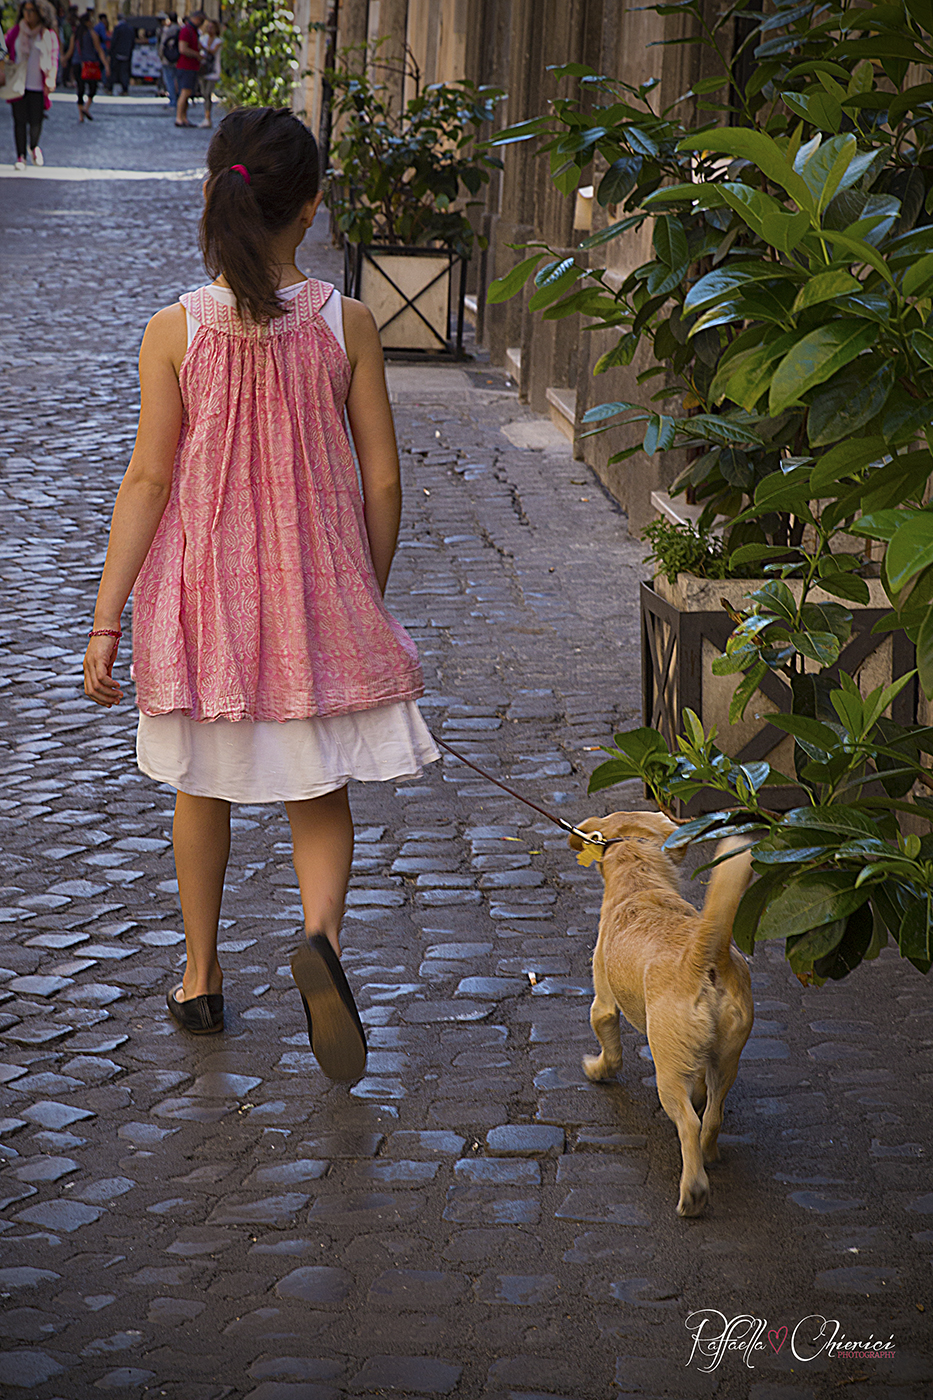 walking in Trastevere...